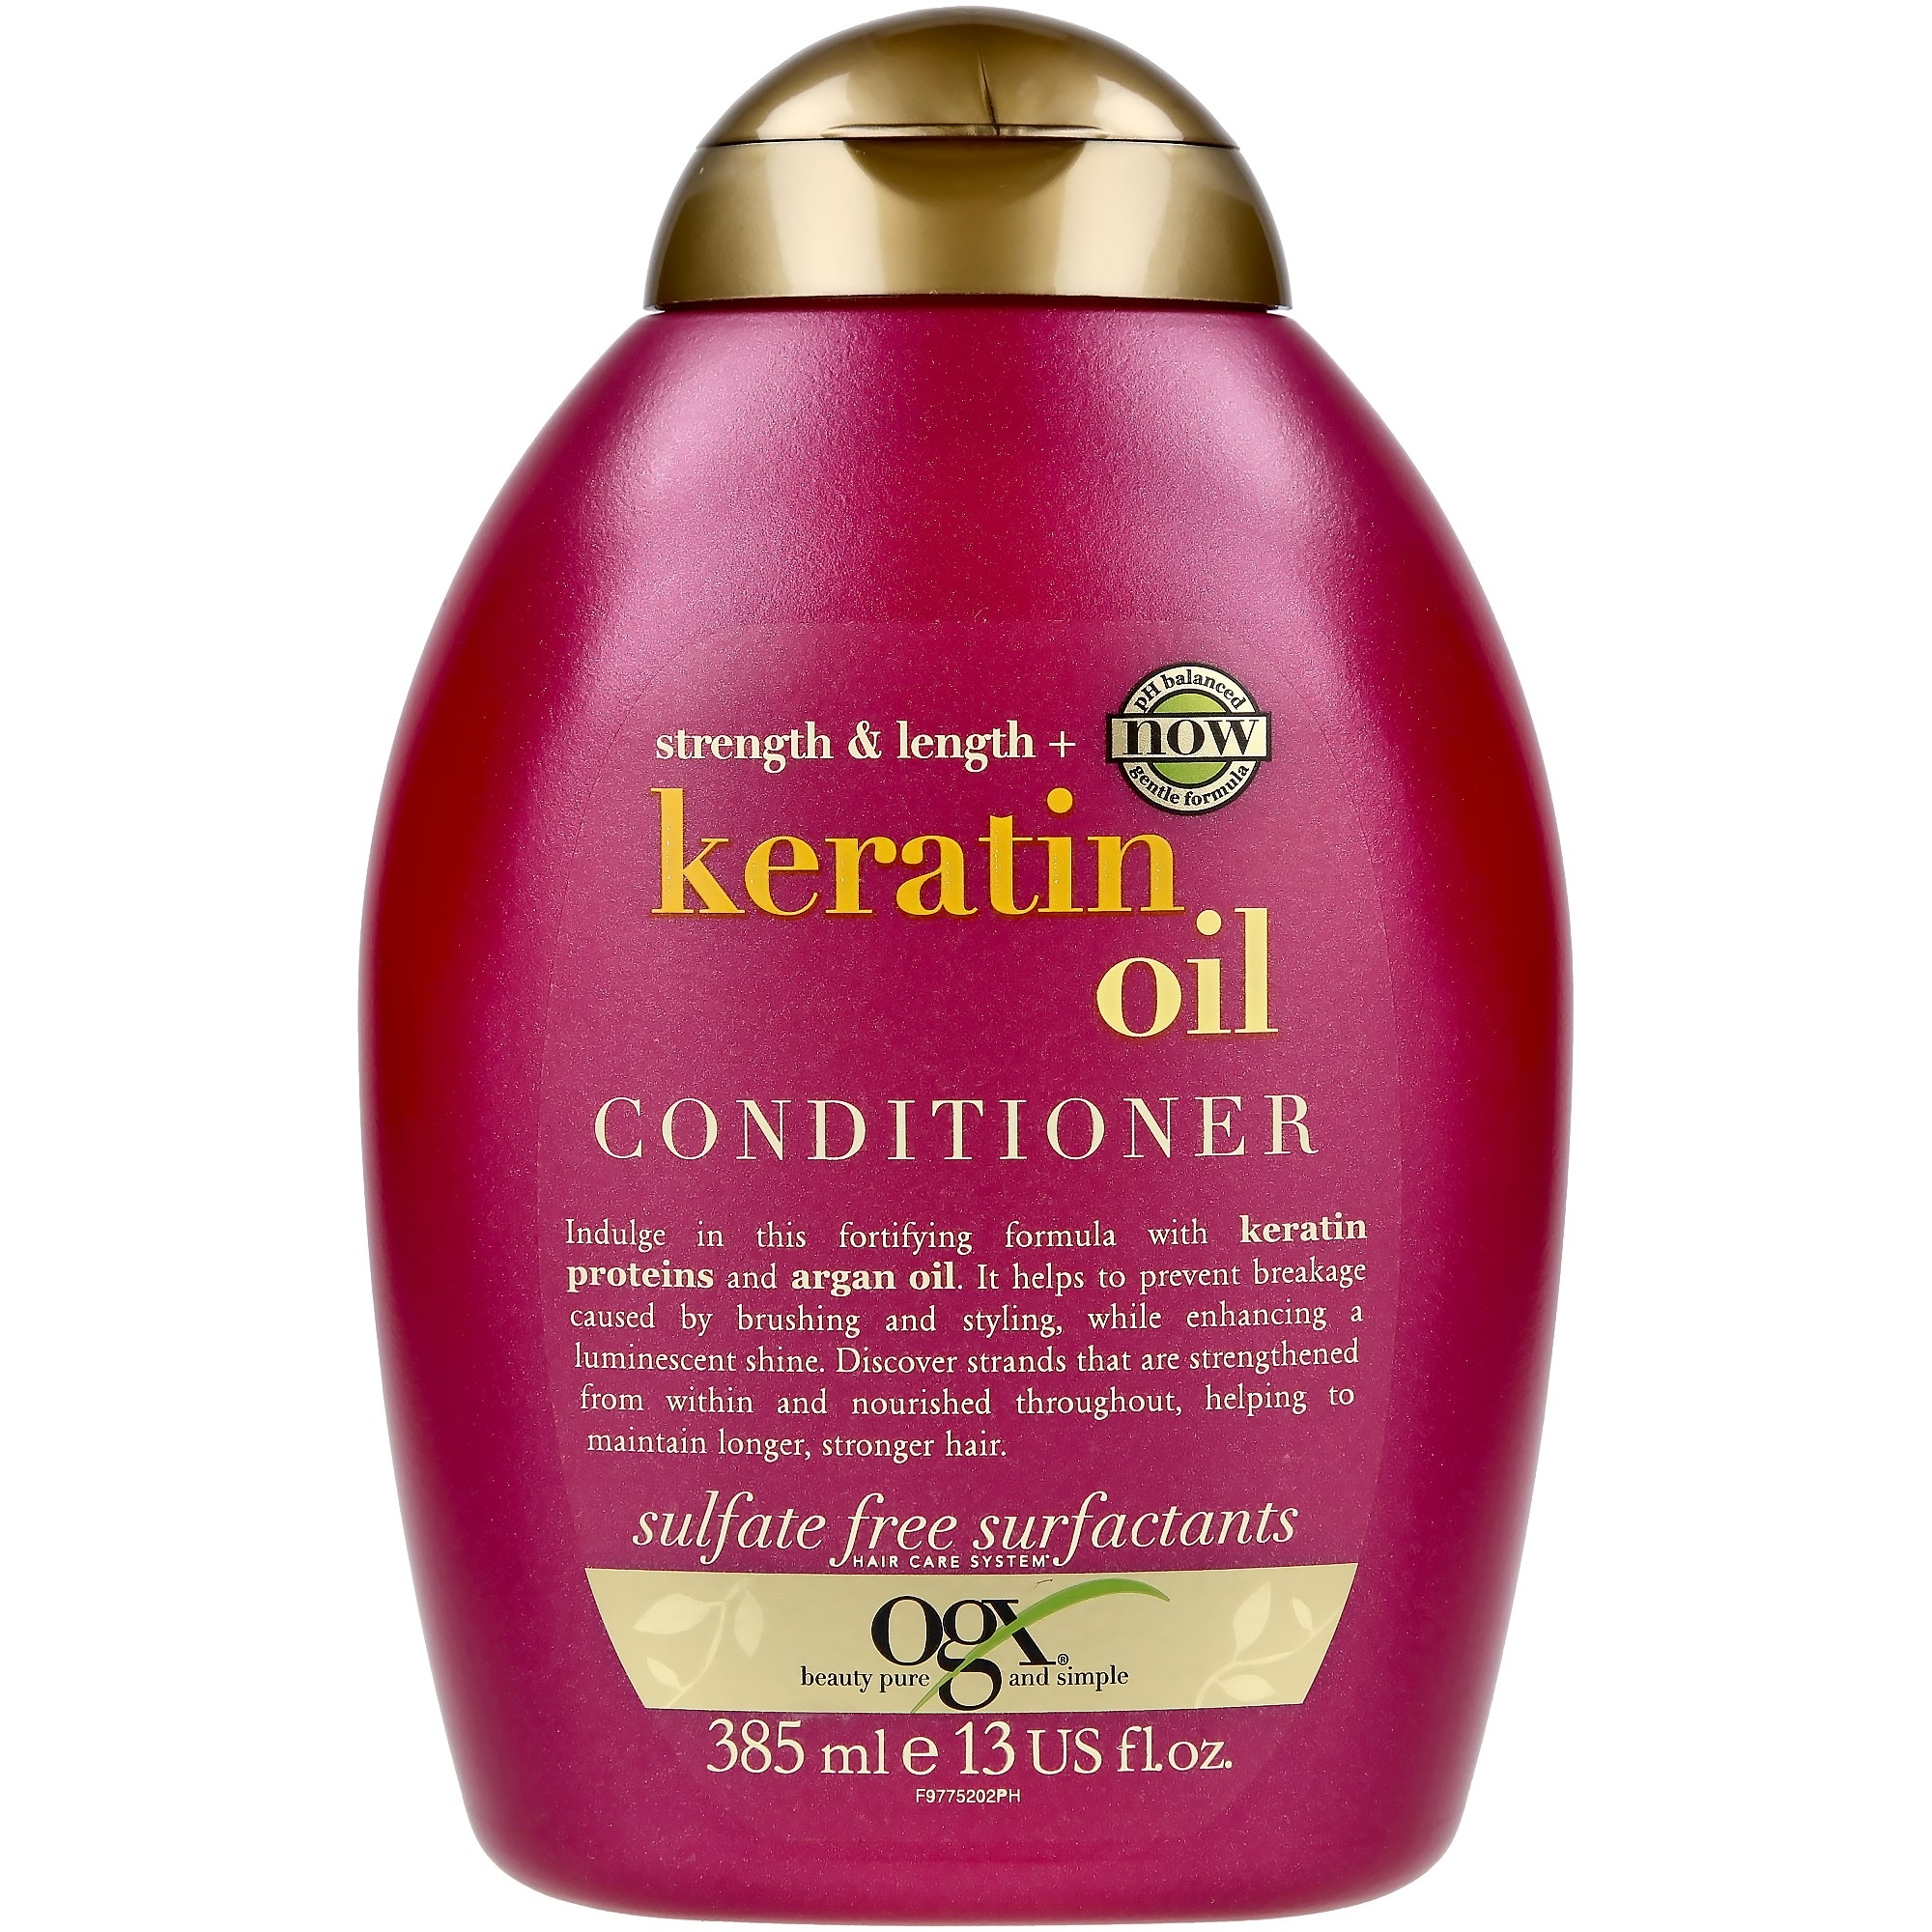 OGX Anti Breakage Keratin Oil Conditioner 385ml